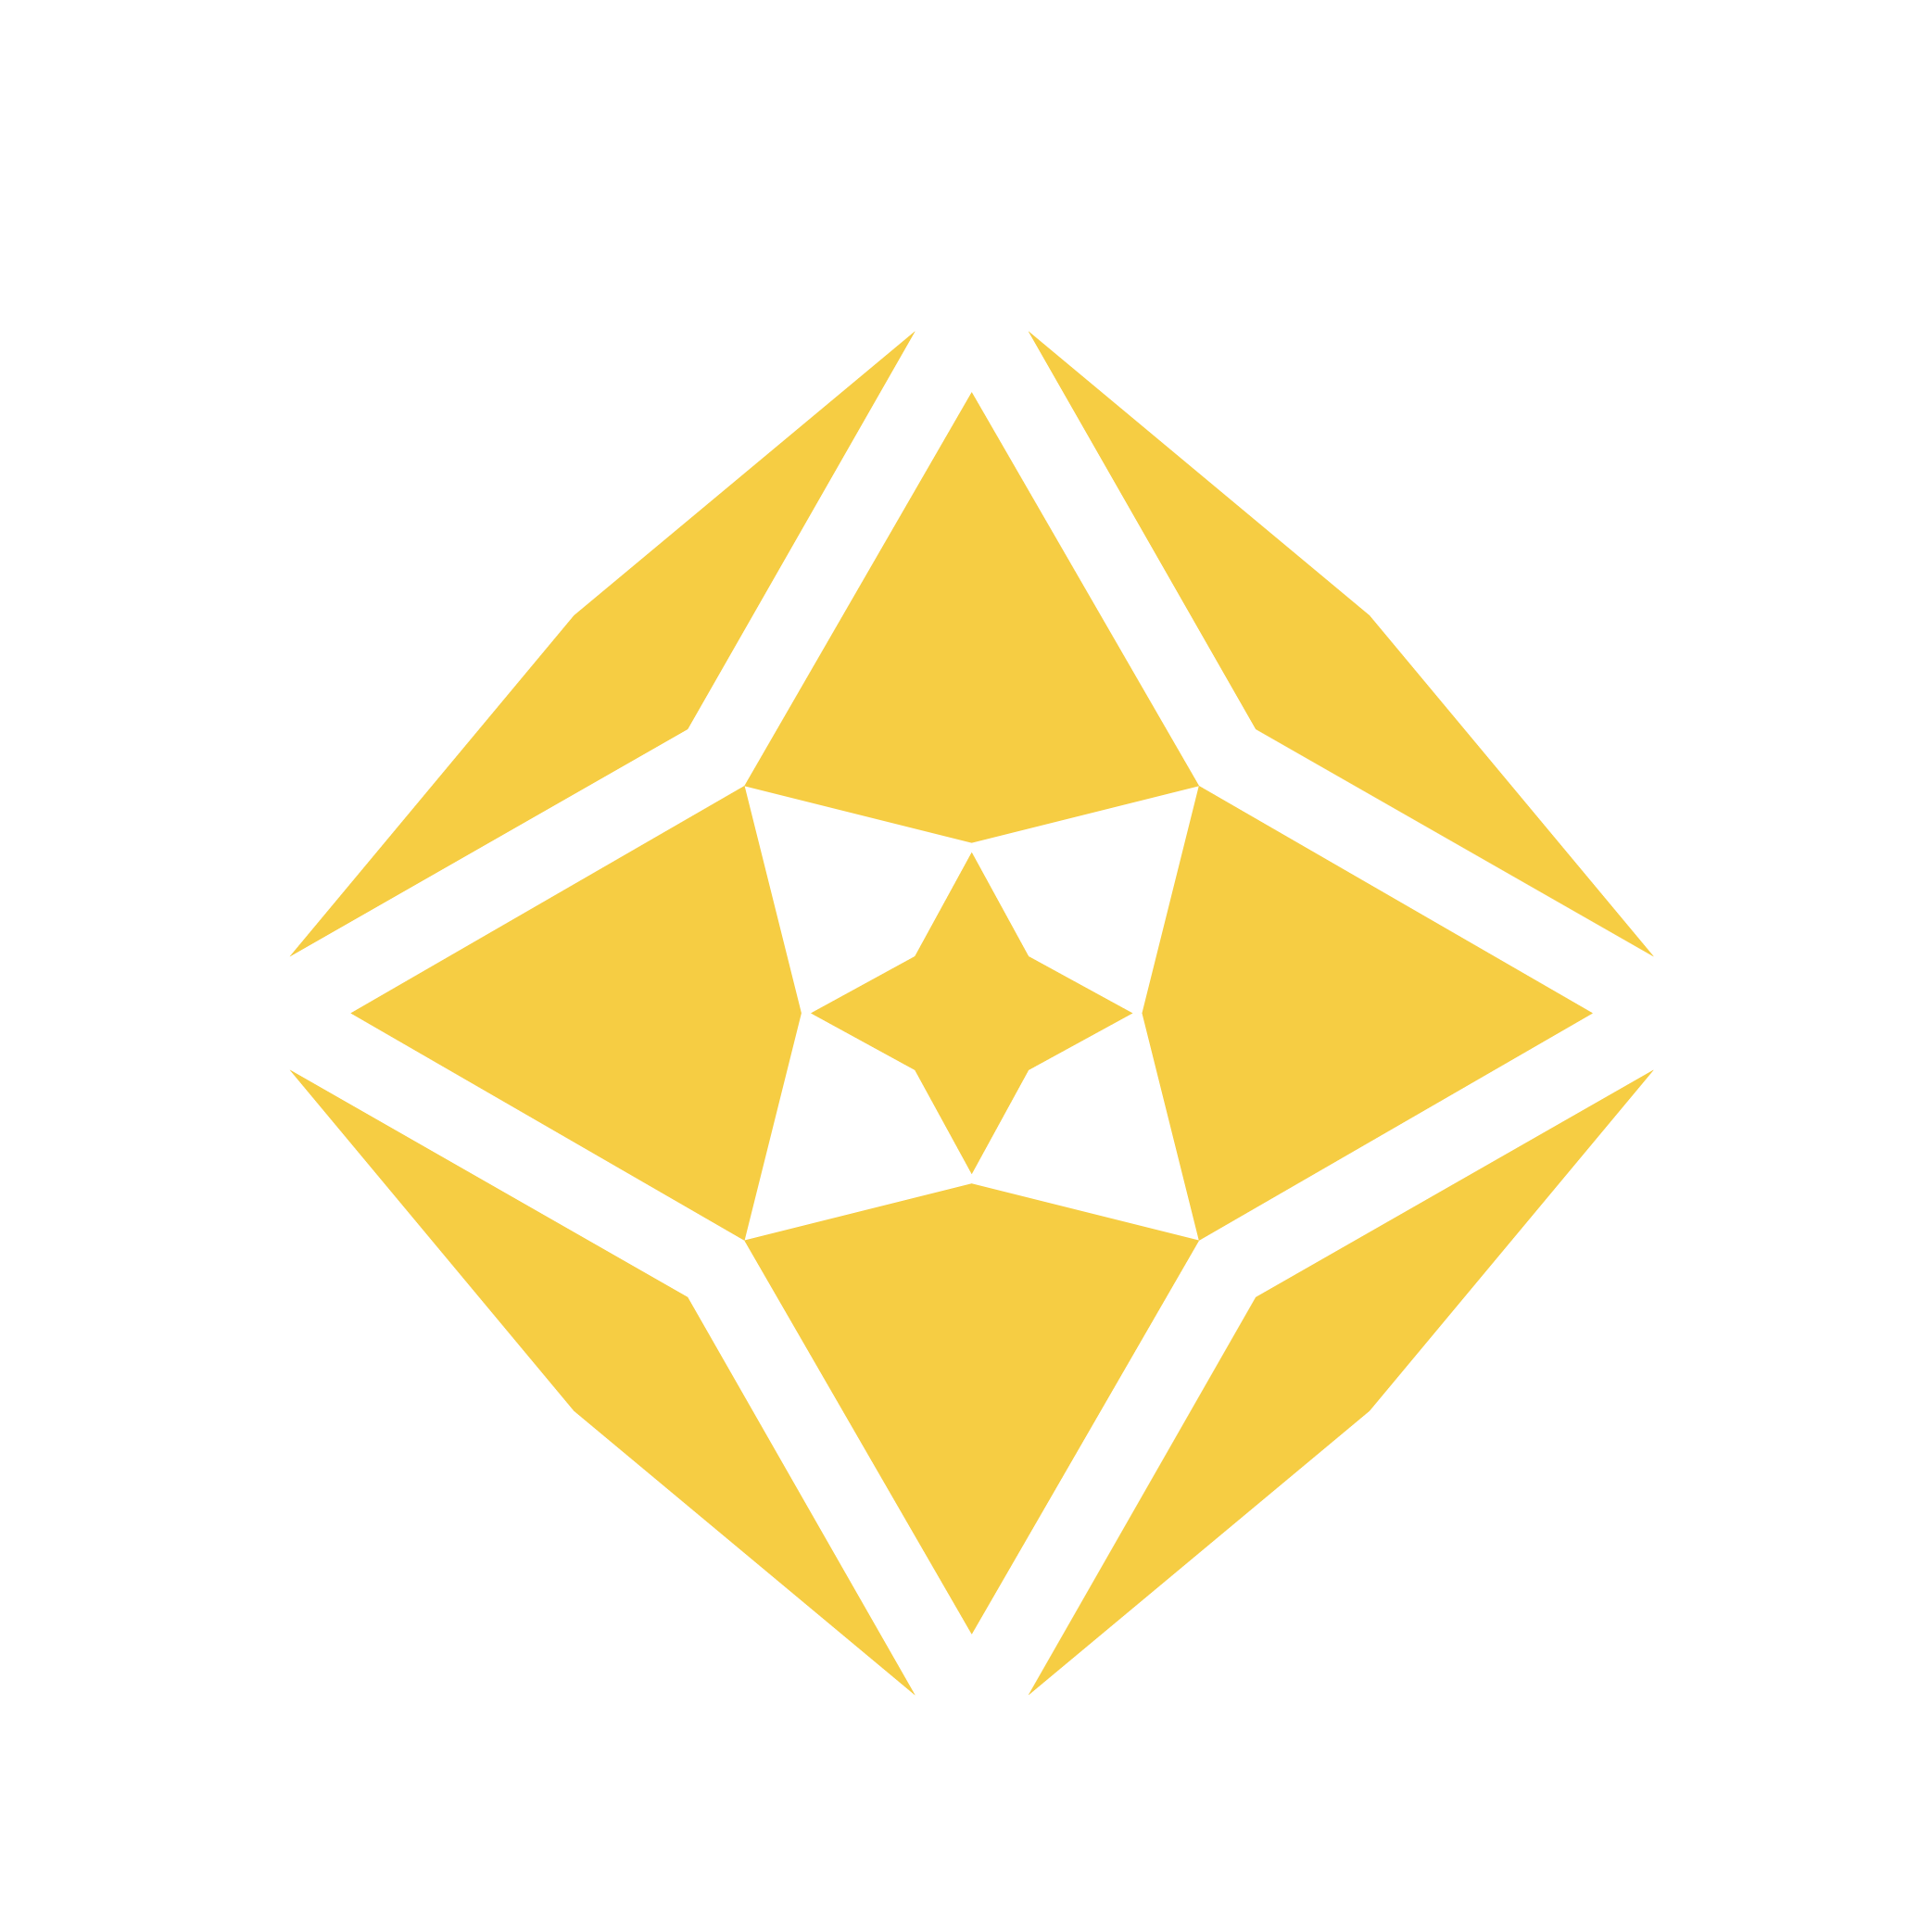 Clout logo icon yellow